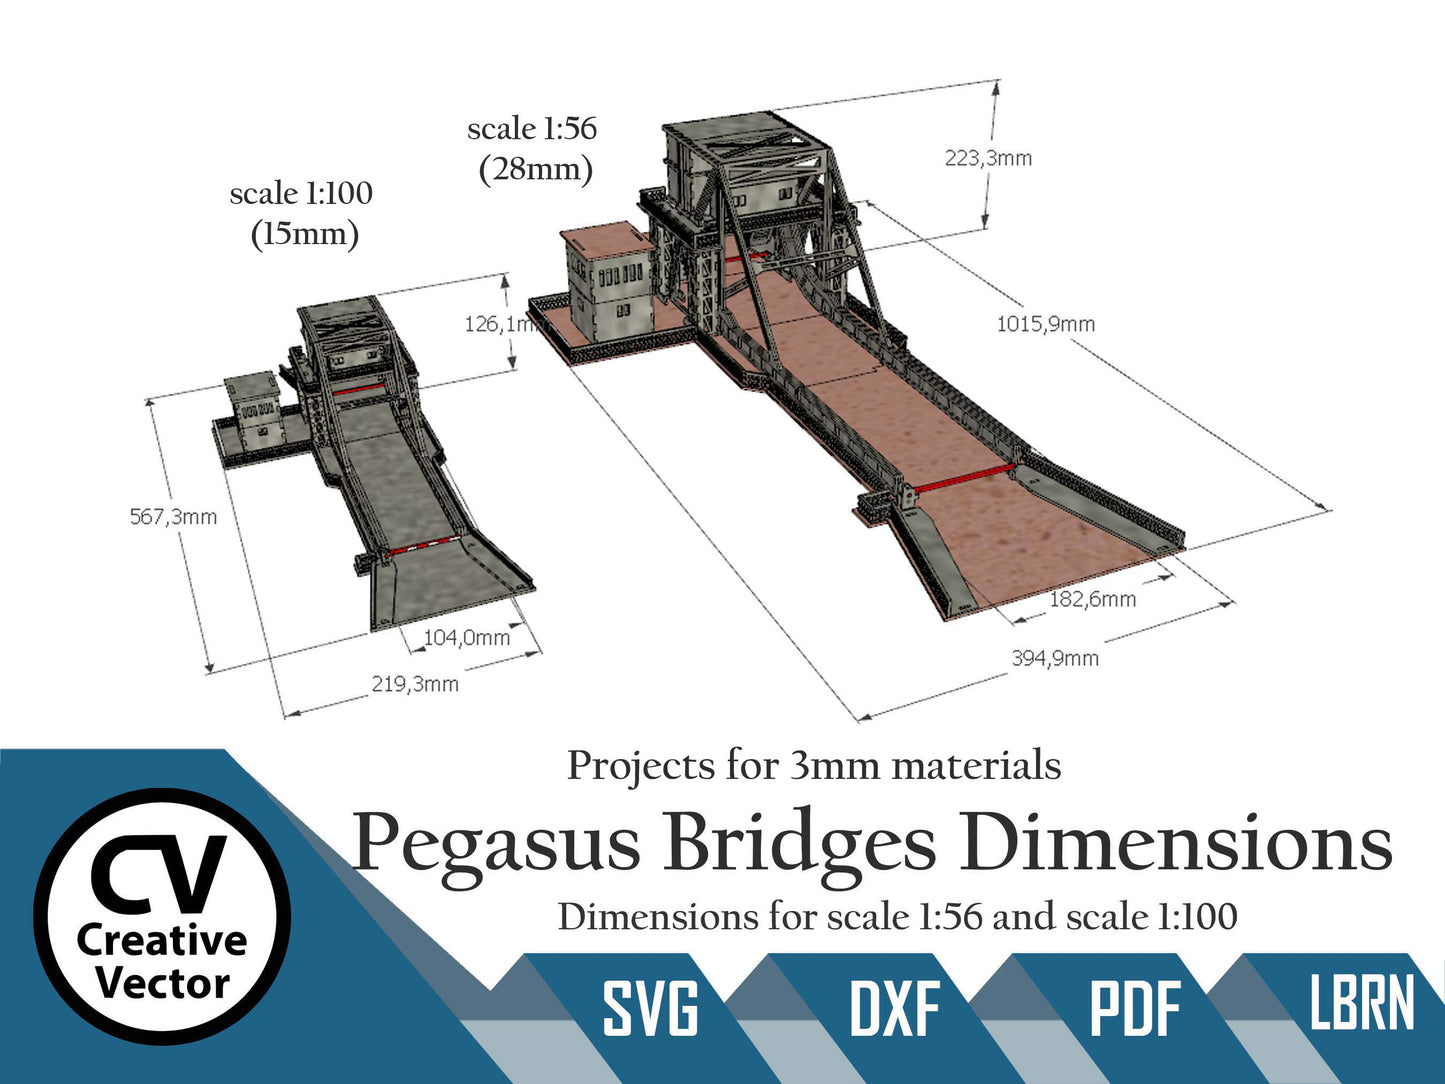 Pegasus Bridge in scale 15mm (1:100 / 1:87 / H0) for game Flames of War